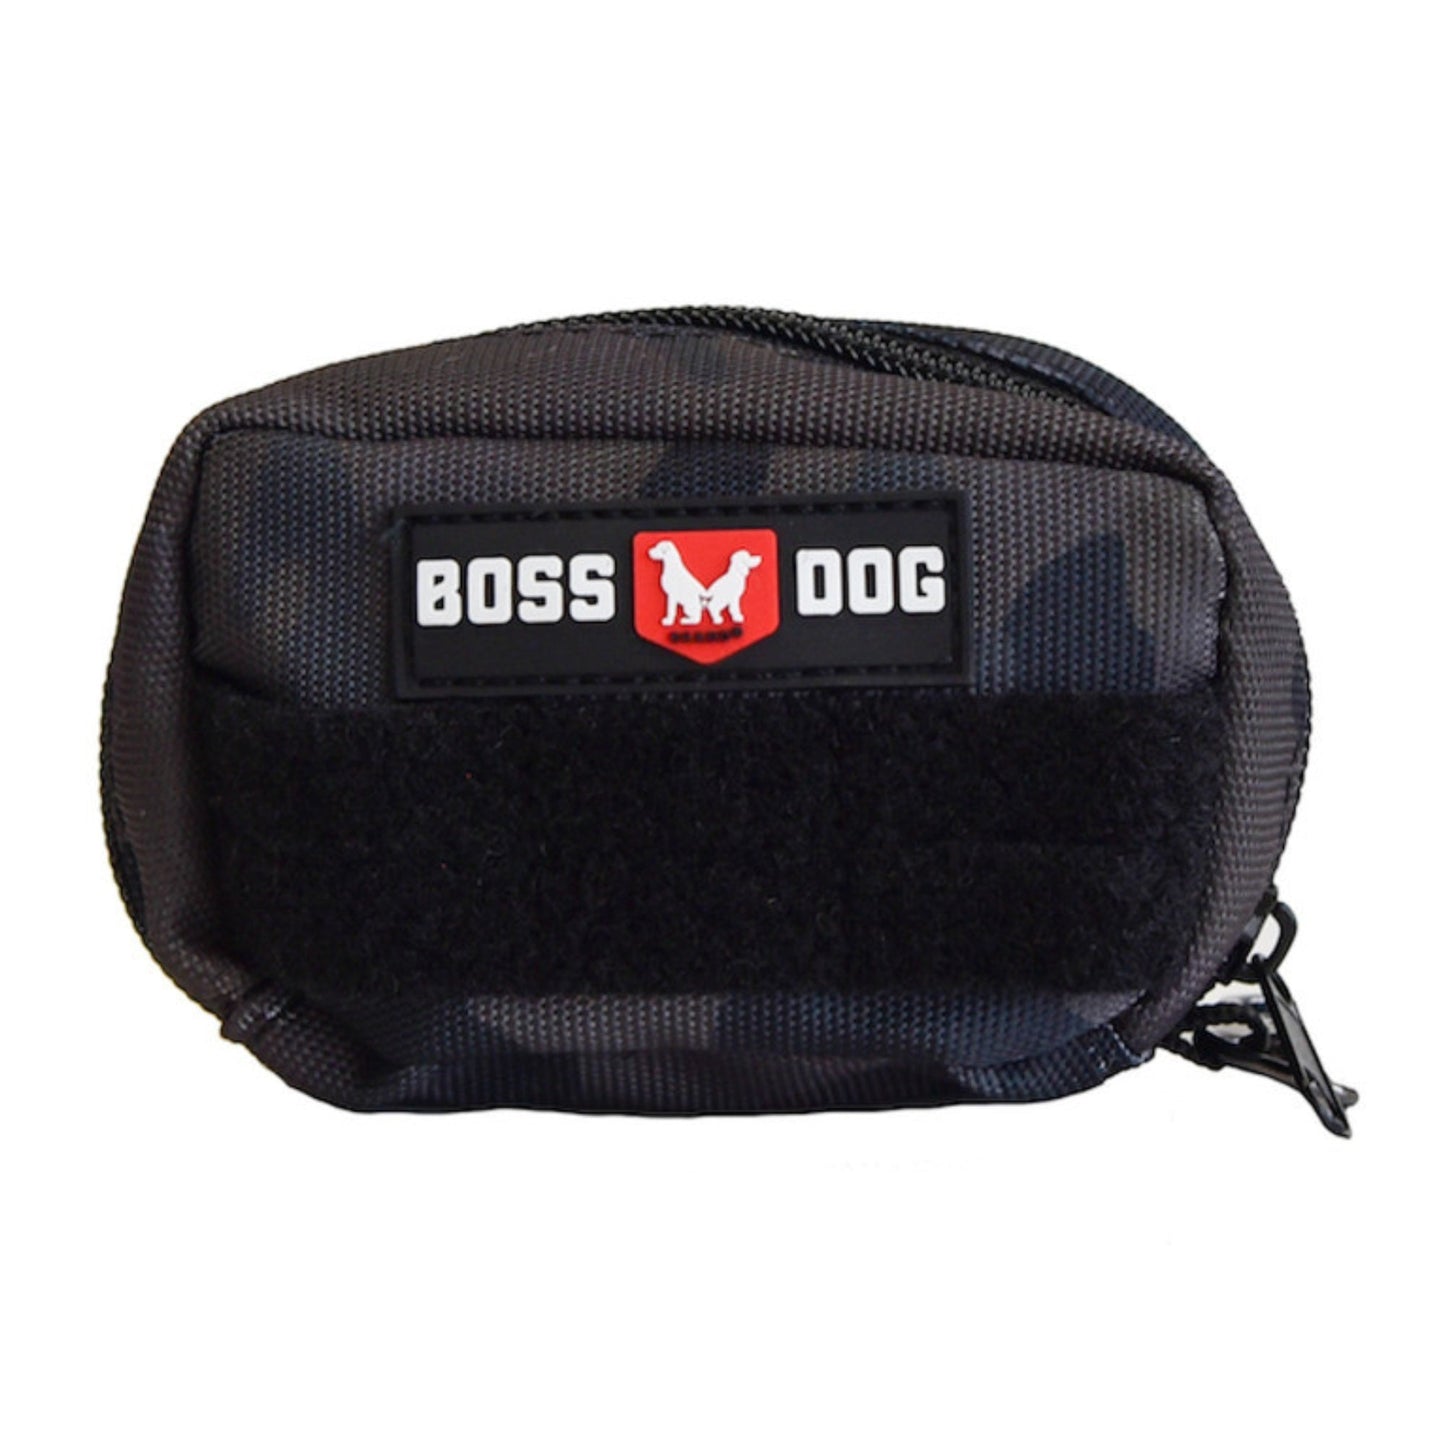 Boss Dog Tactical Molle Harness Bag Black Camo, 1ea/Large